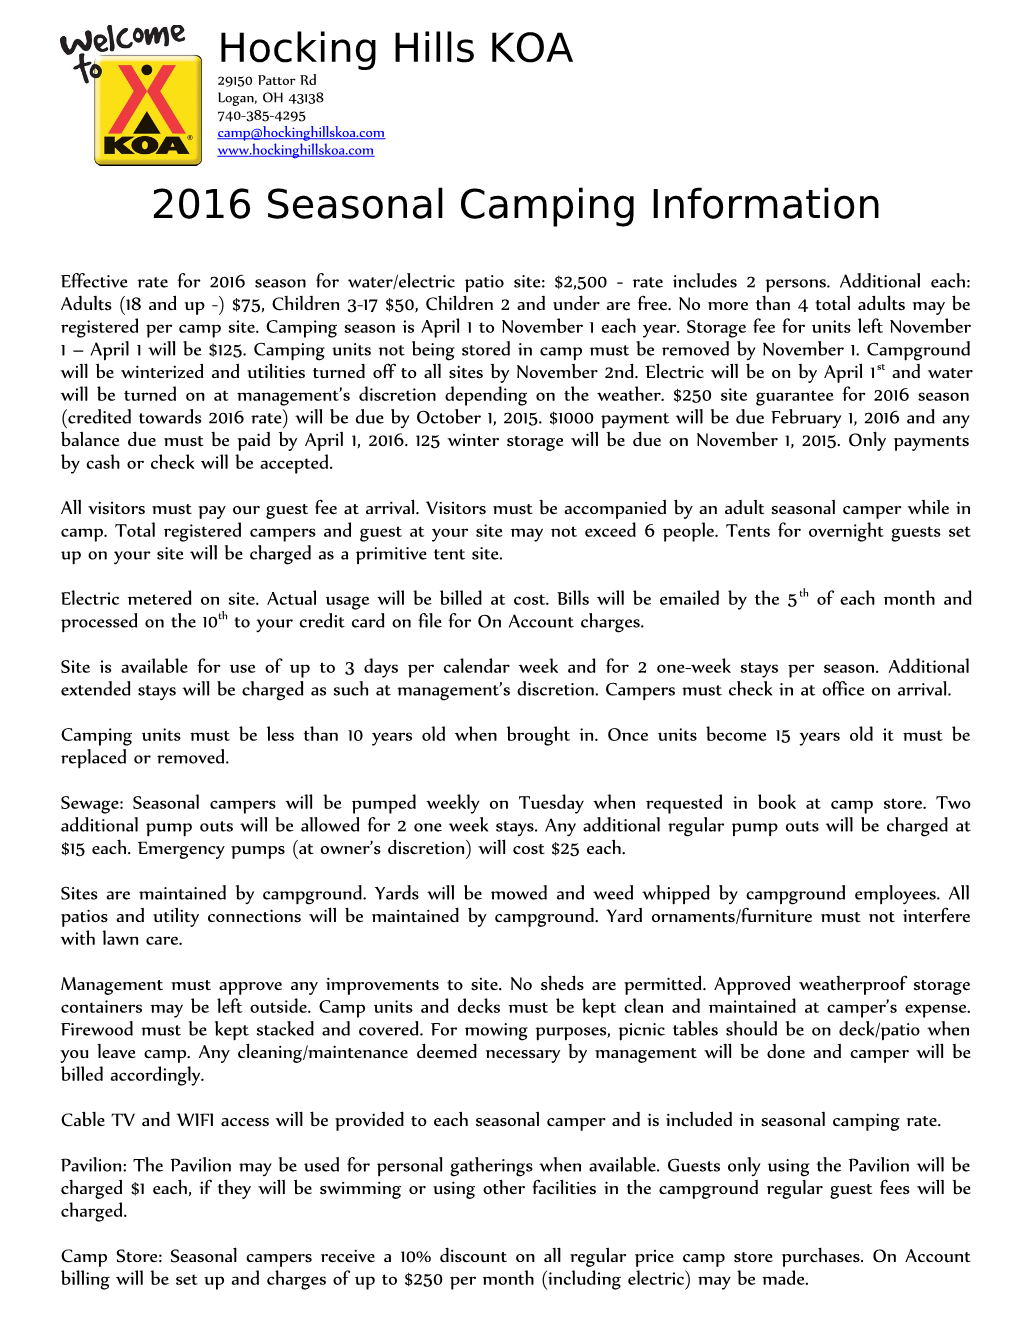 Seasonal Camping Information